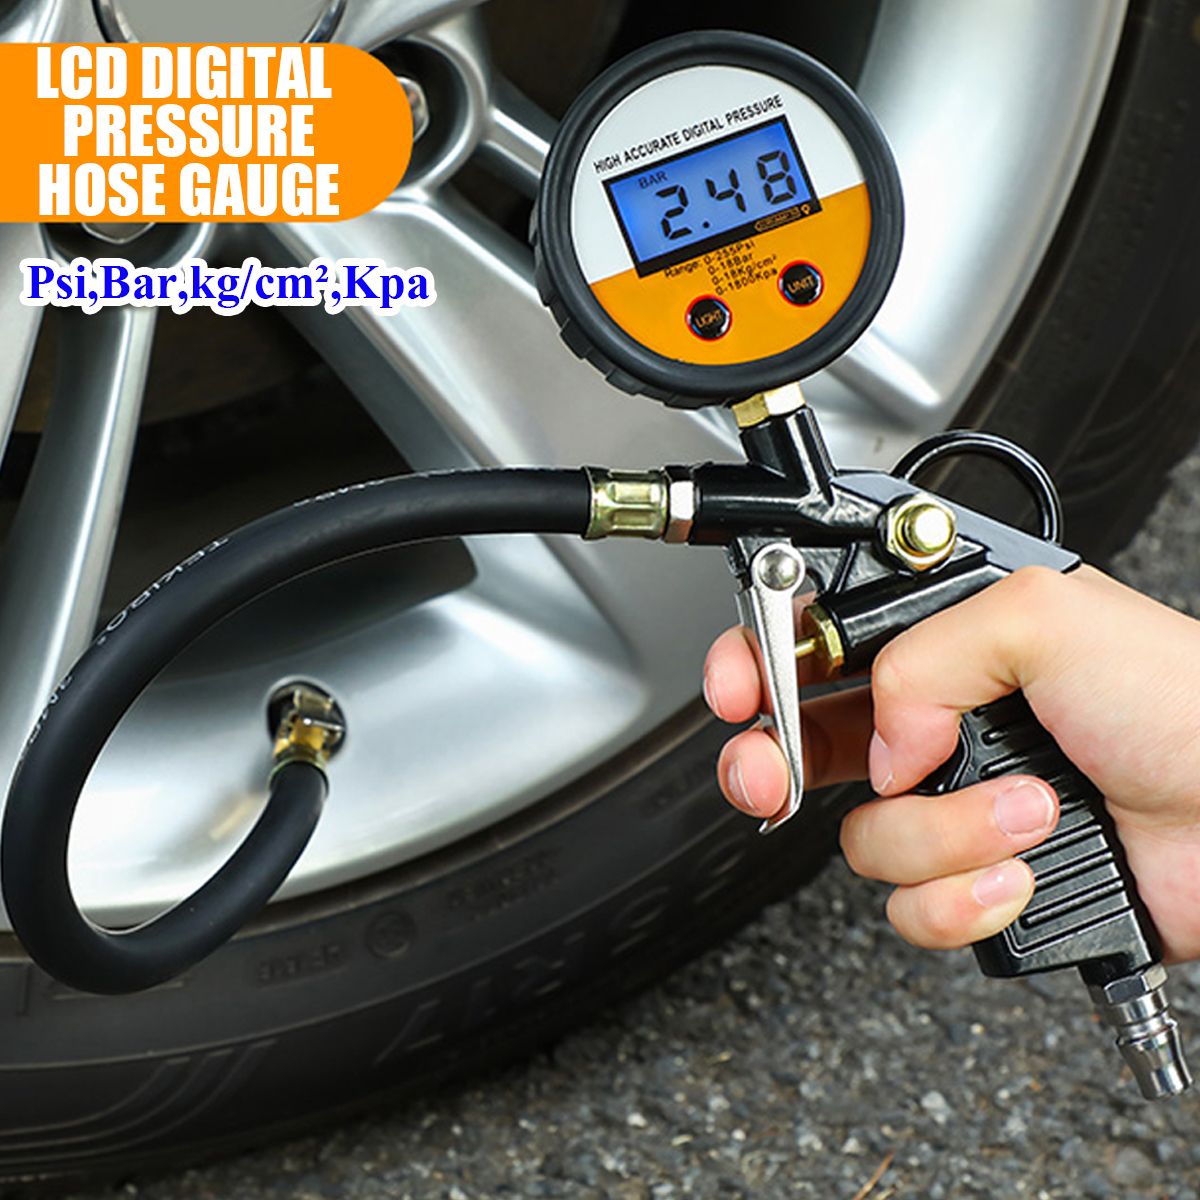 LCD-Digital-Pressure-Hose-Gauge-Car-Air-Tire-Tyre-Inflator-Compressor-1765729